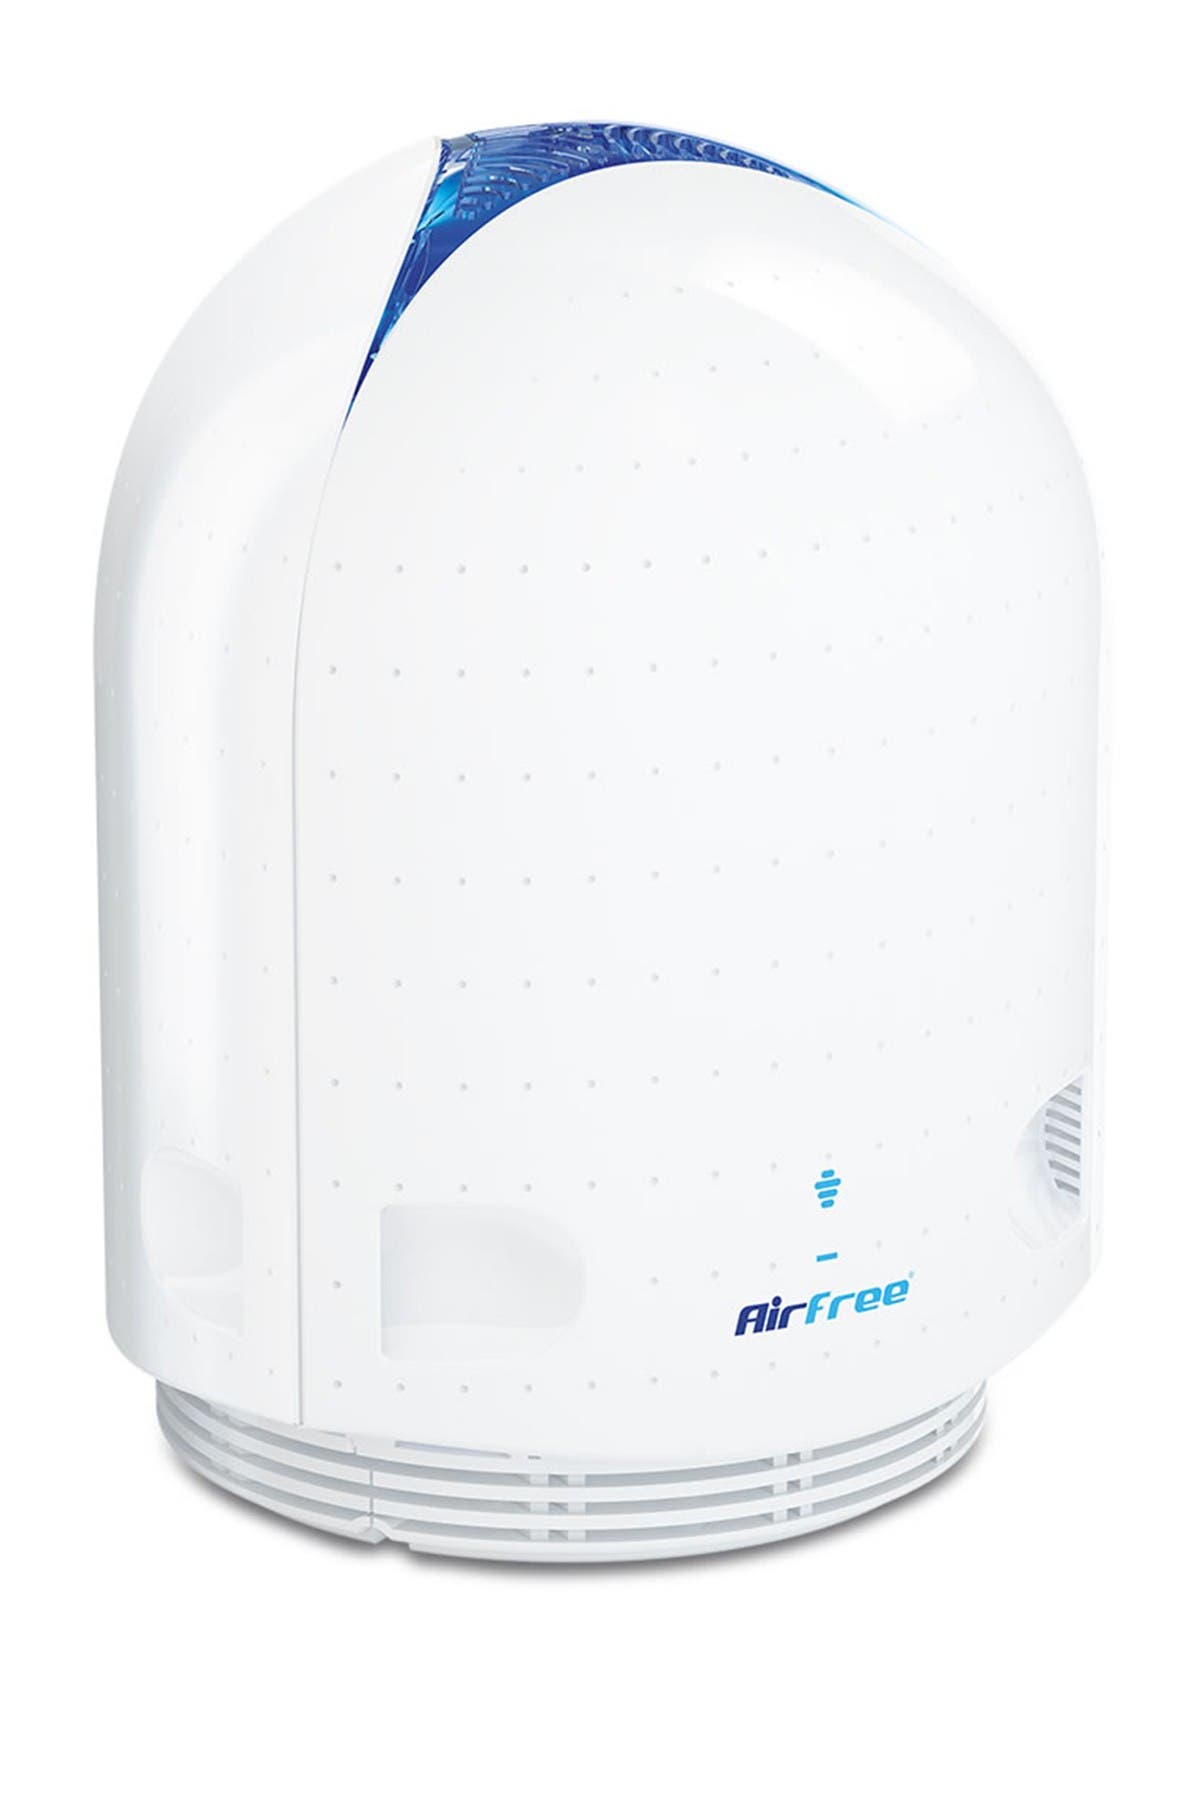 Airfree P2000 Filterless Air Purifier In White